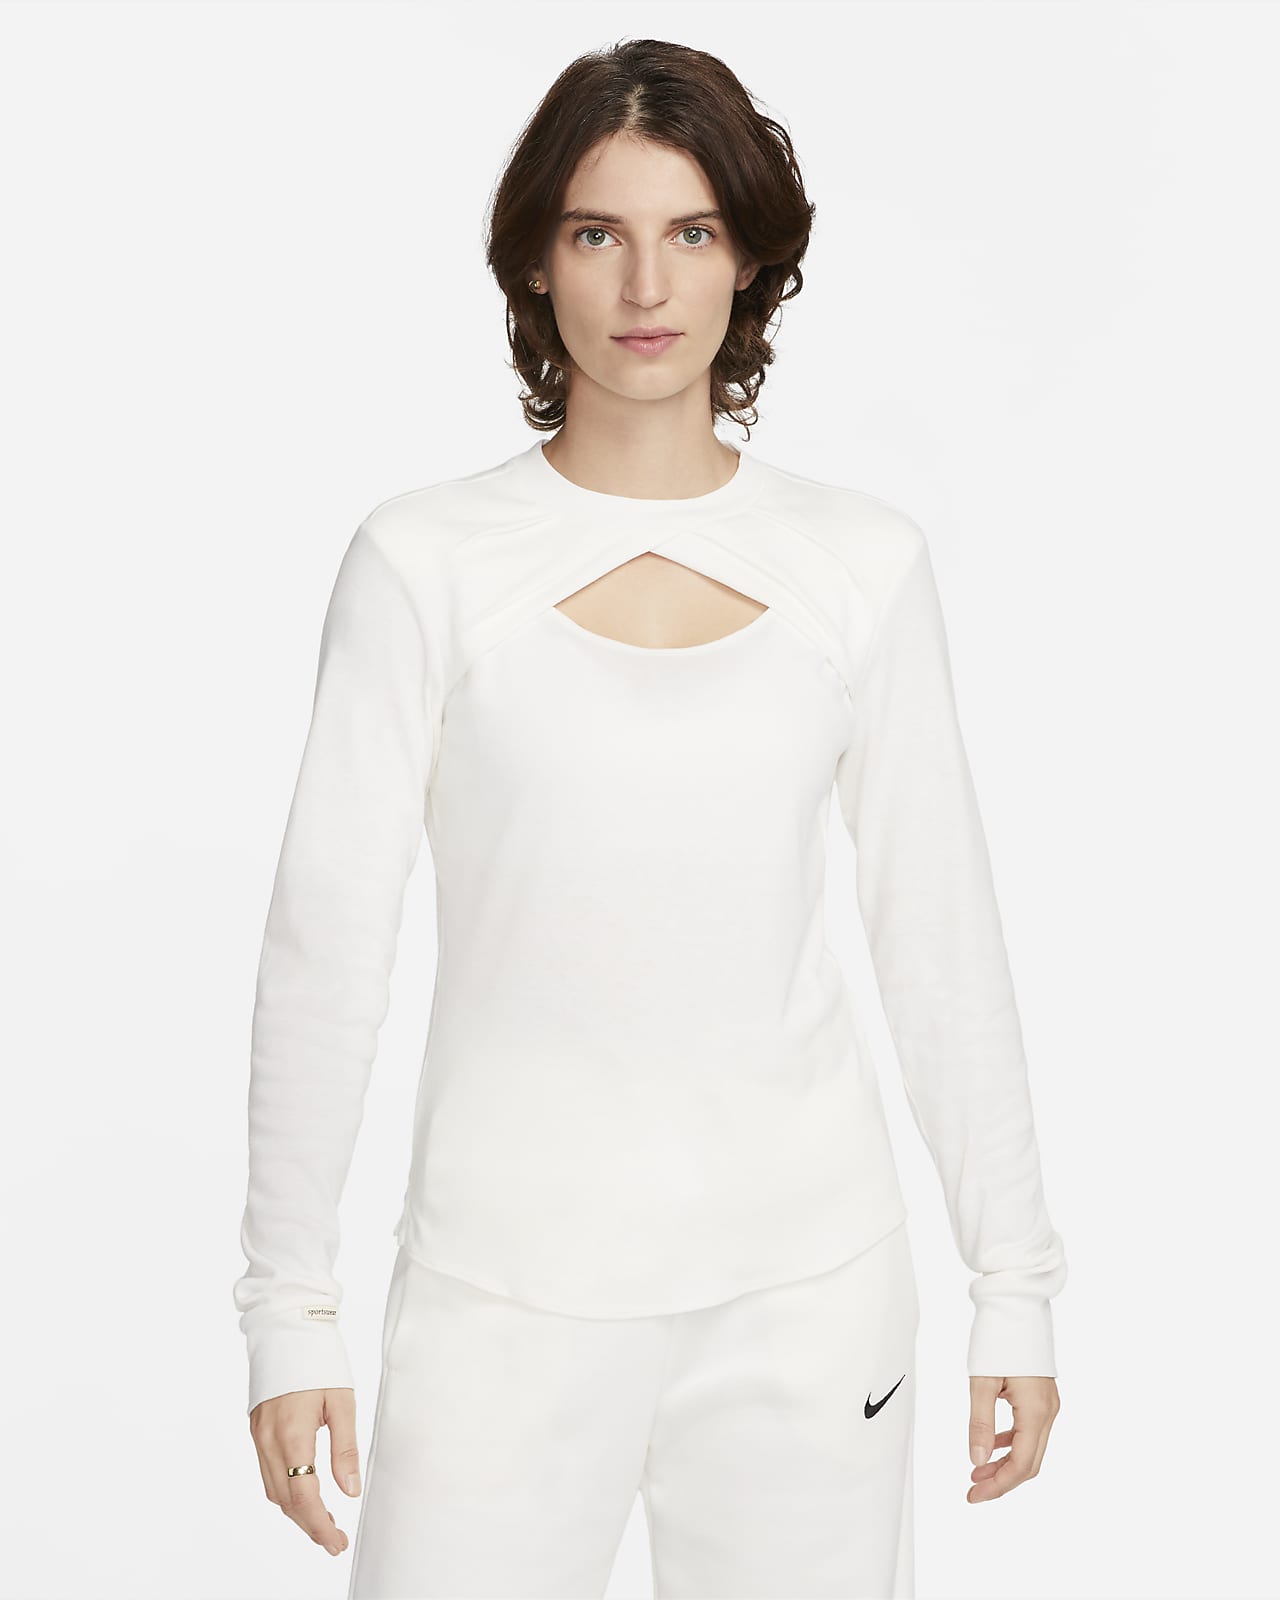 Nike Sportswear Women's Cut-Out Long-Sleeve Top. Nike FI